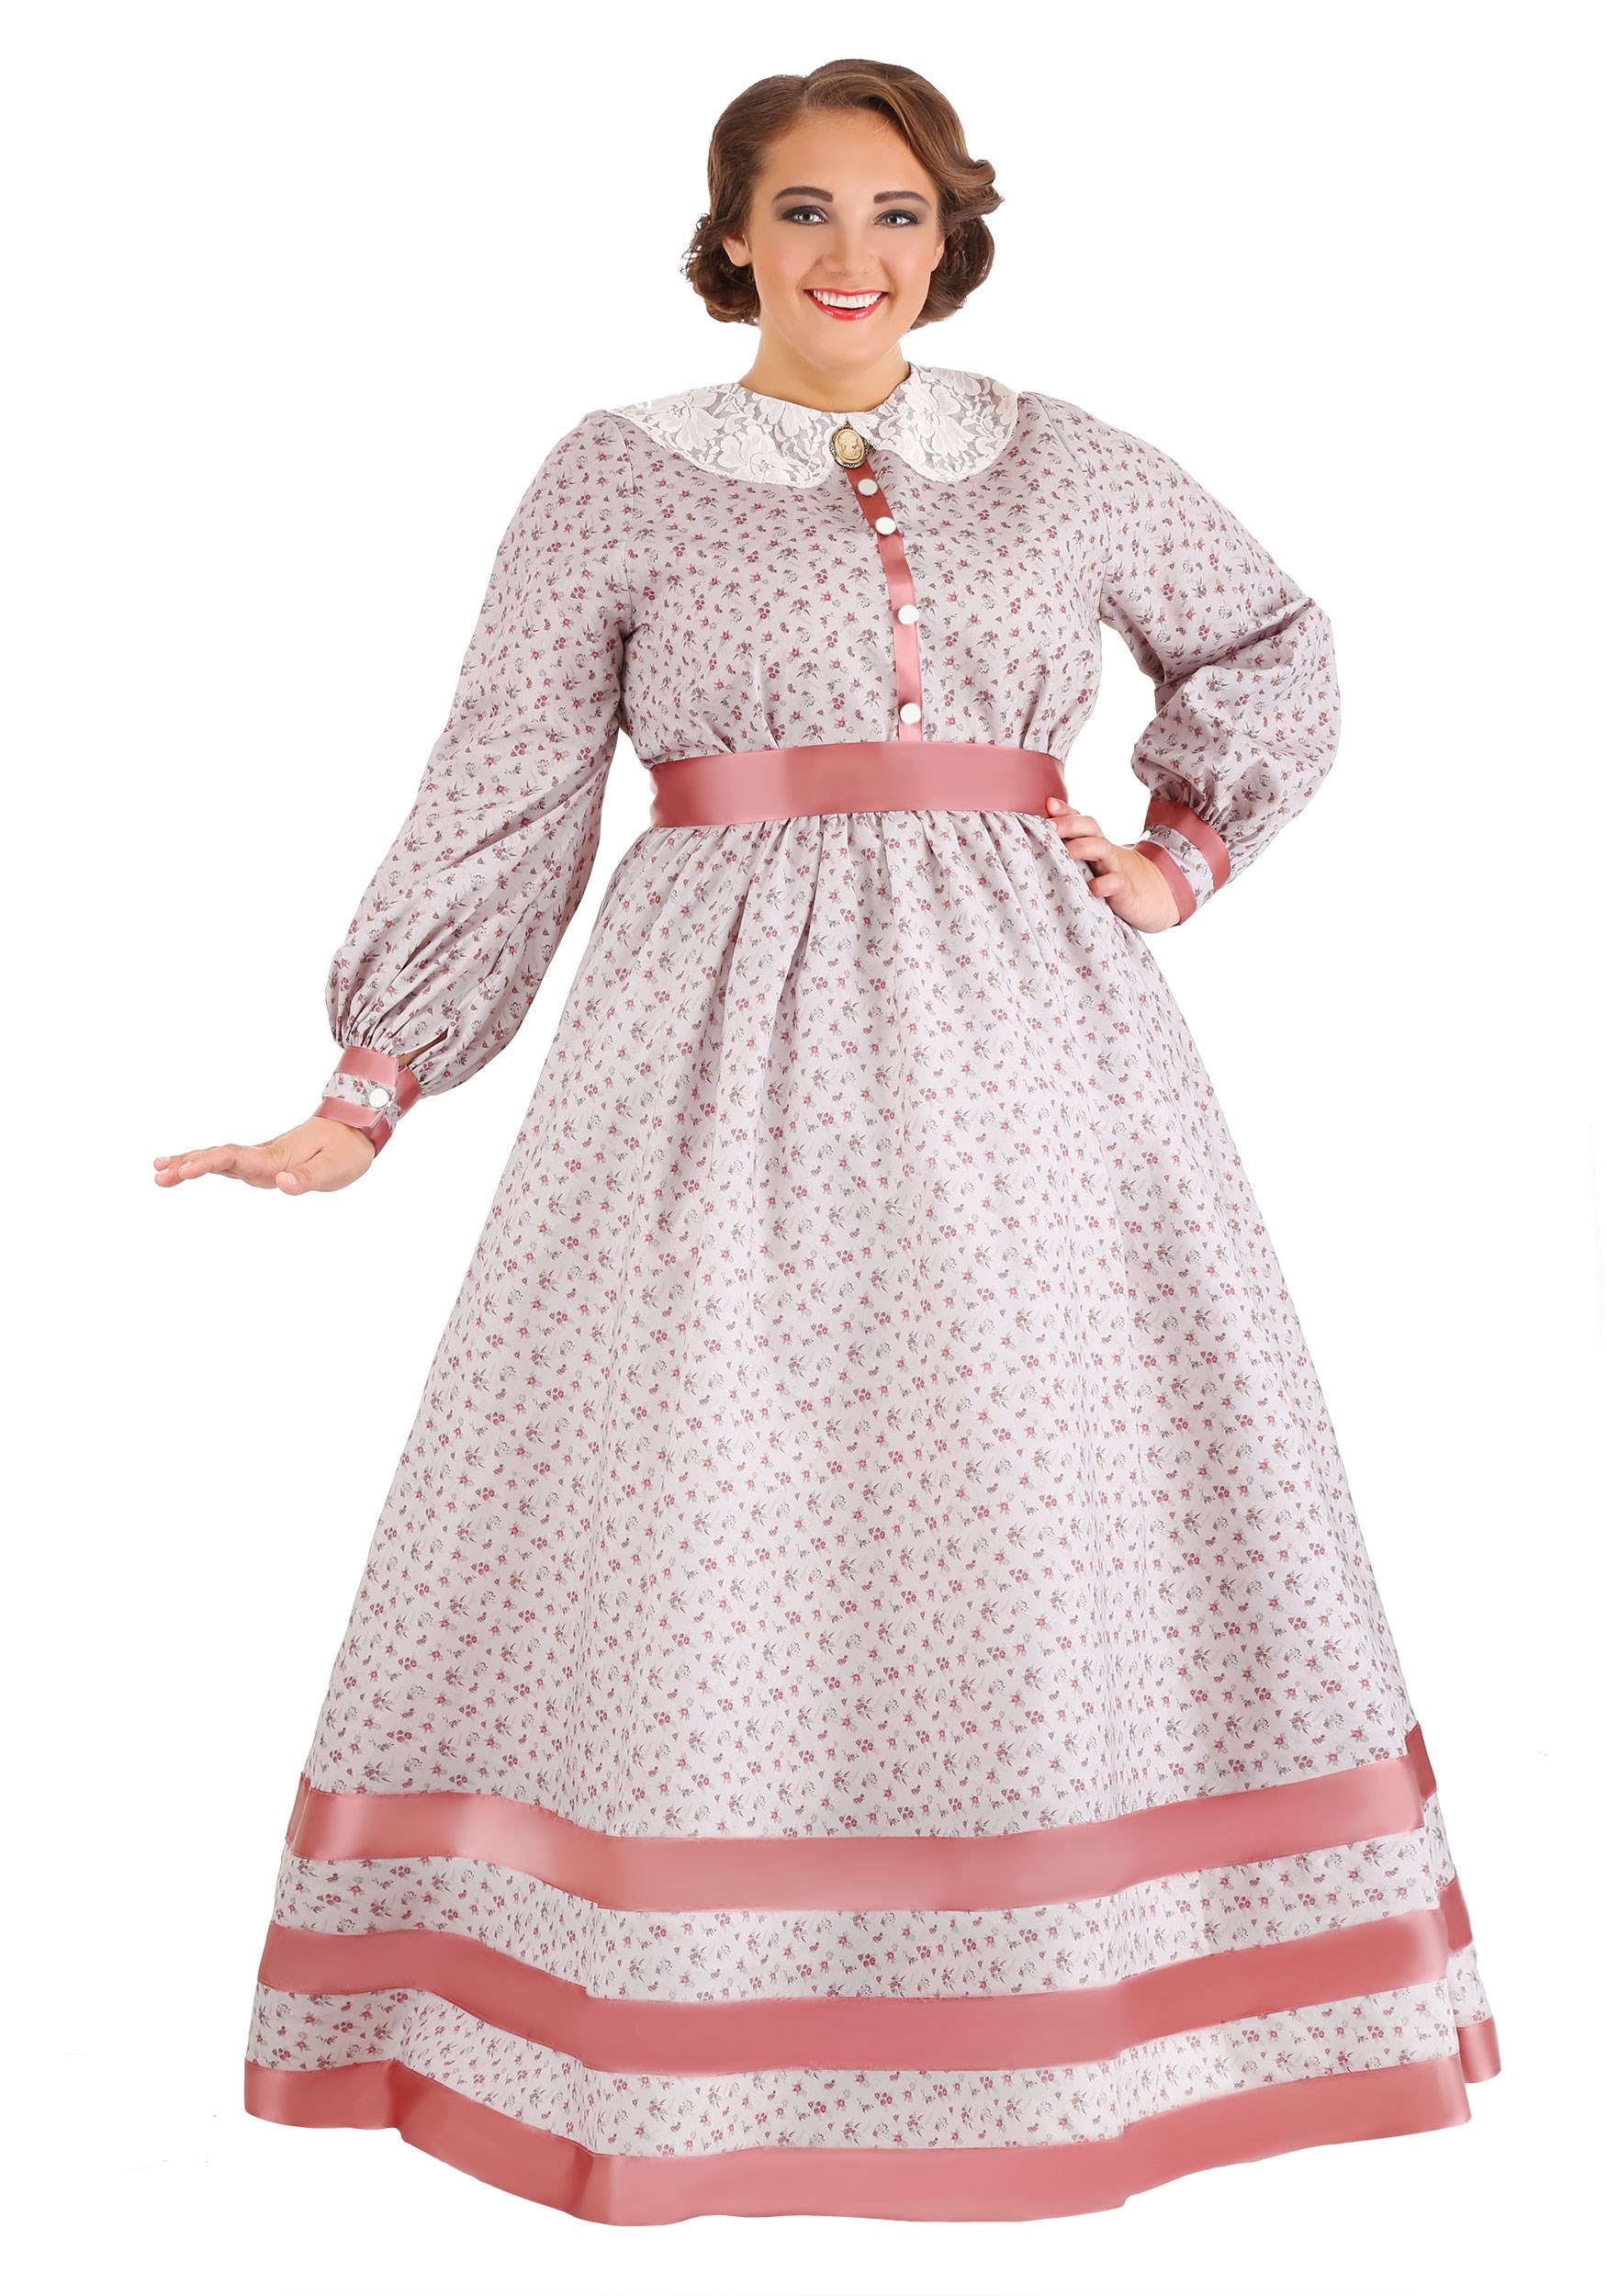 Victorian Plus Size Dresses | Edwardian Clothing, Costumes Plus Size Civil War Dress Costume for Women $69.99 AT vintagedancer.com